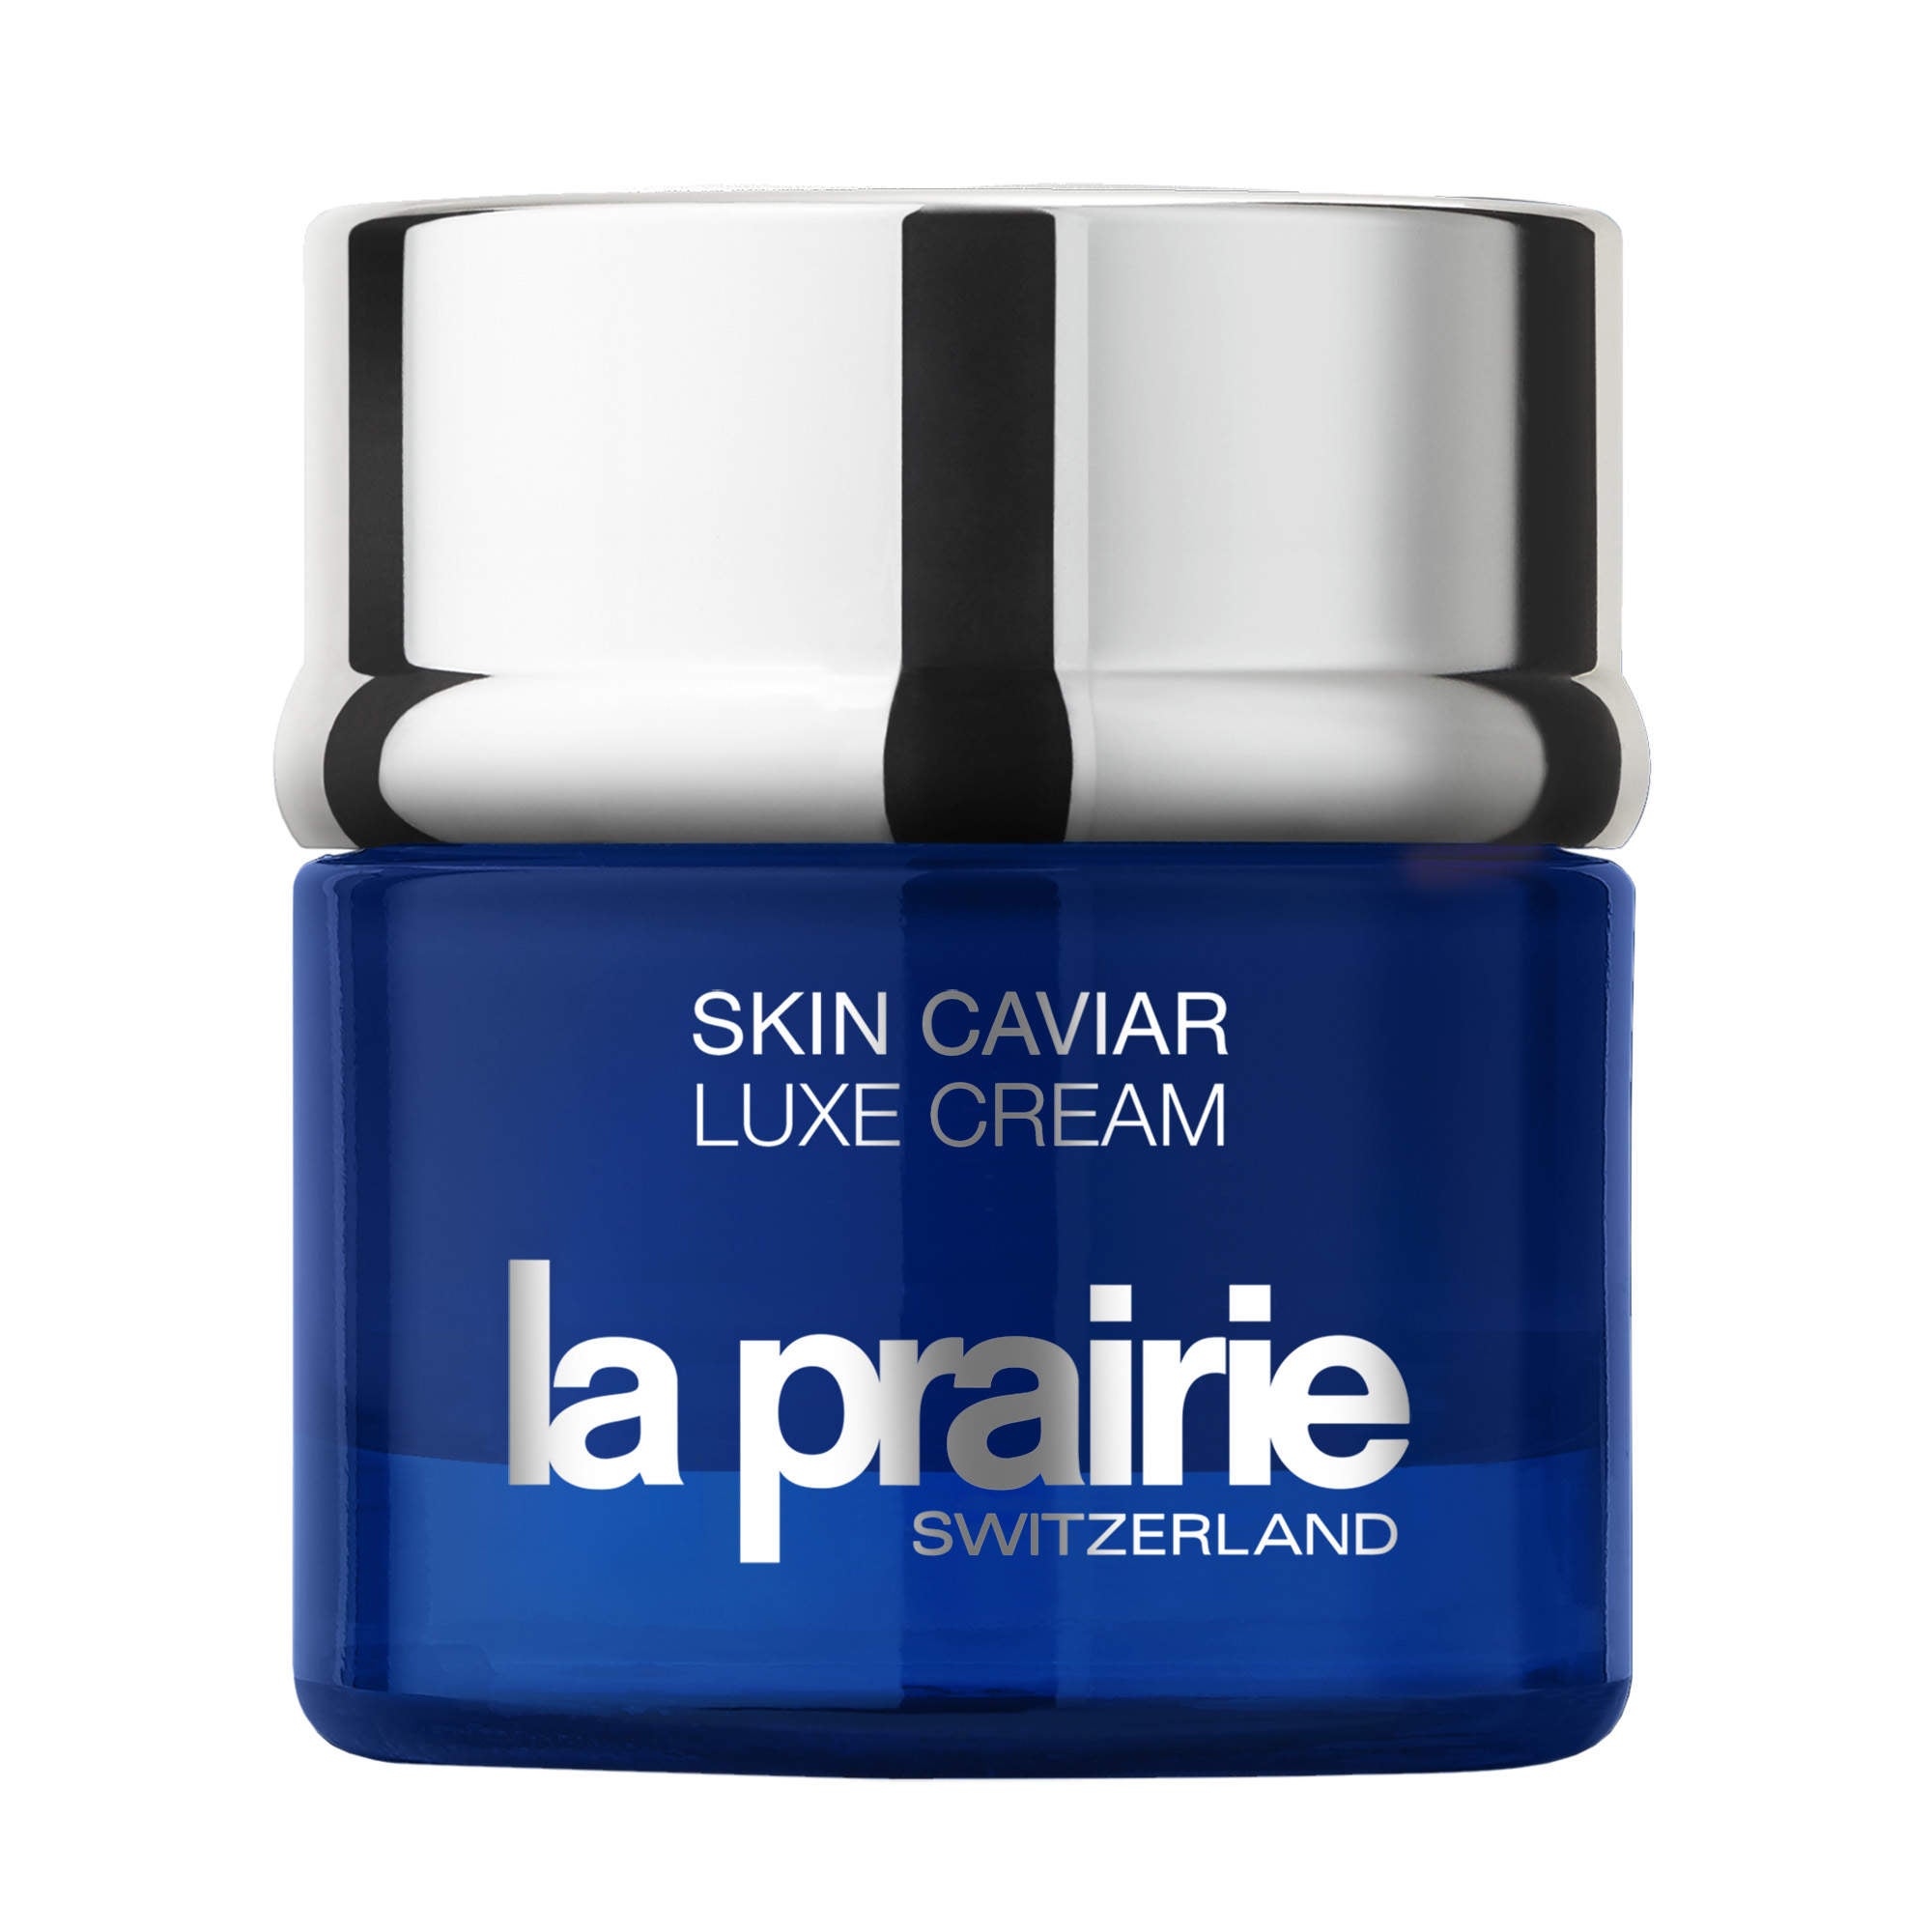 La Prairie Launches Skin Caviar Premier